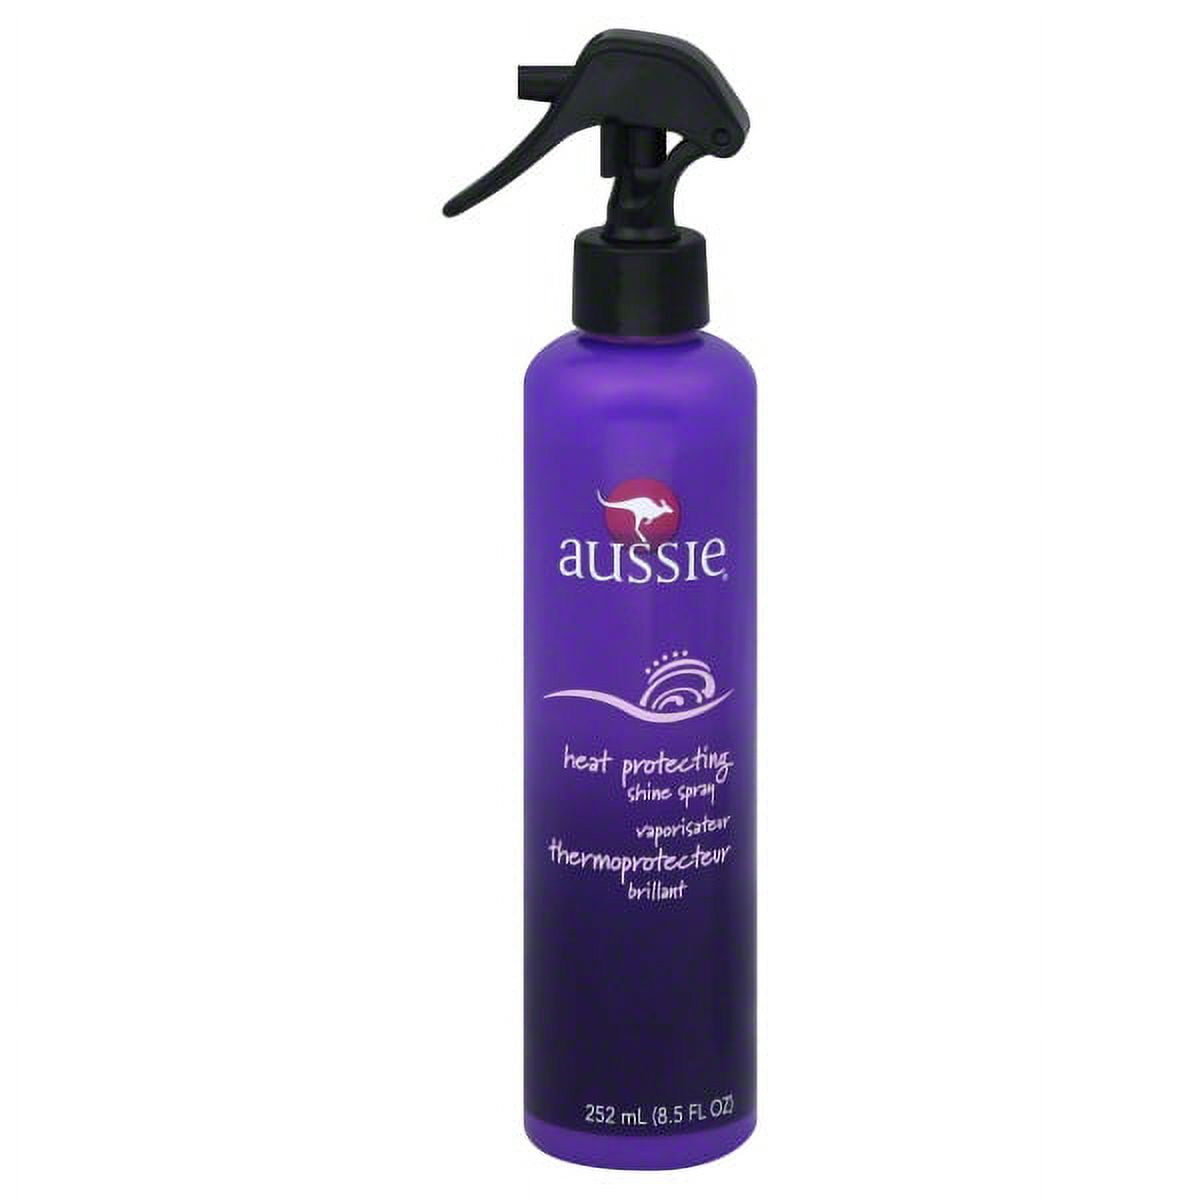 Aussie Hair Insurance Heat Protecting Hair Shine Spray 8.5 Fl Oz - image 1 of 6